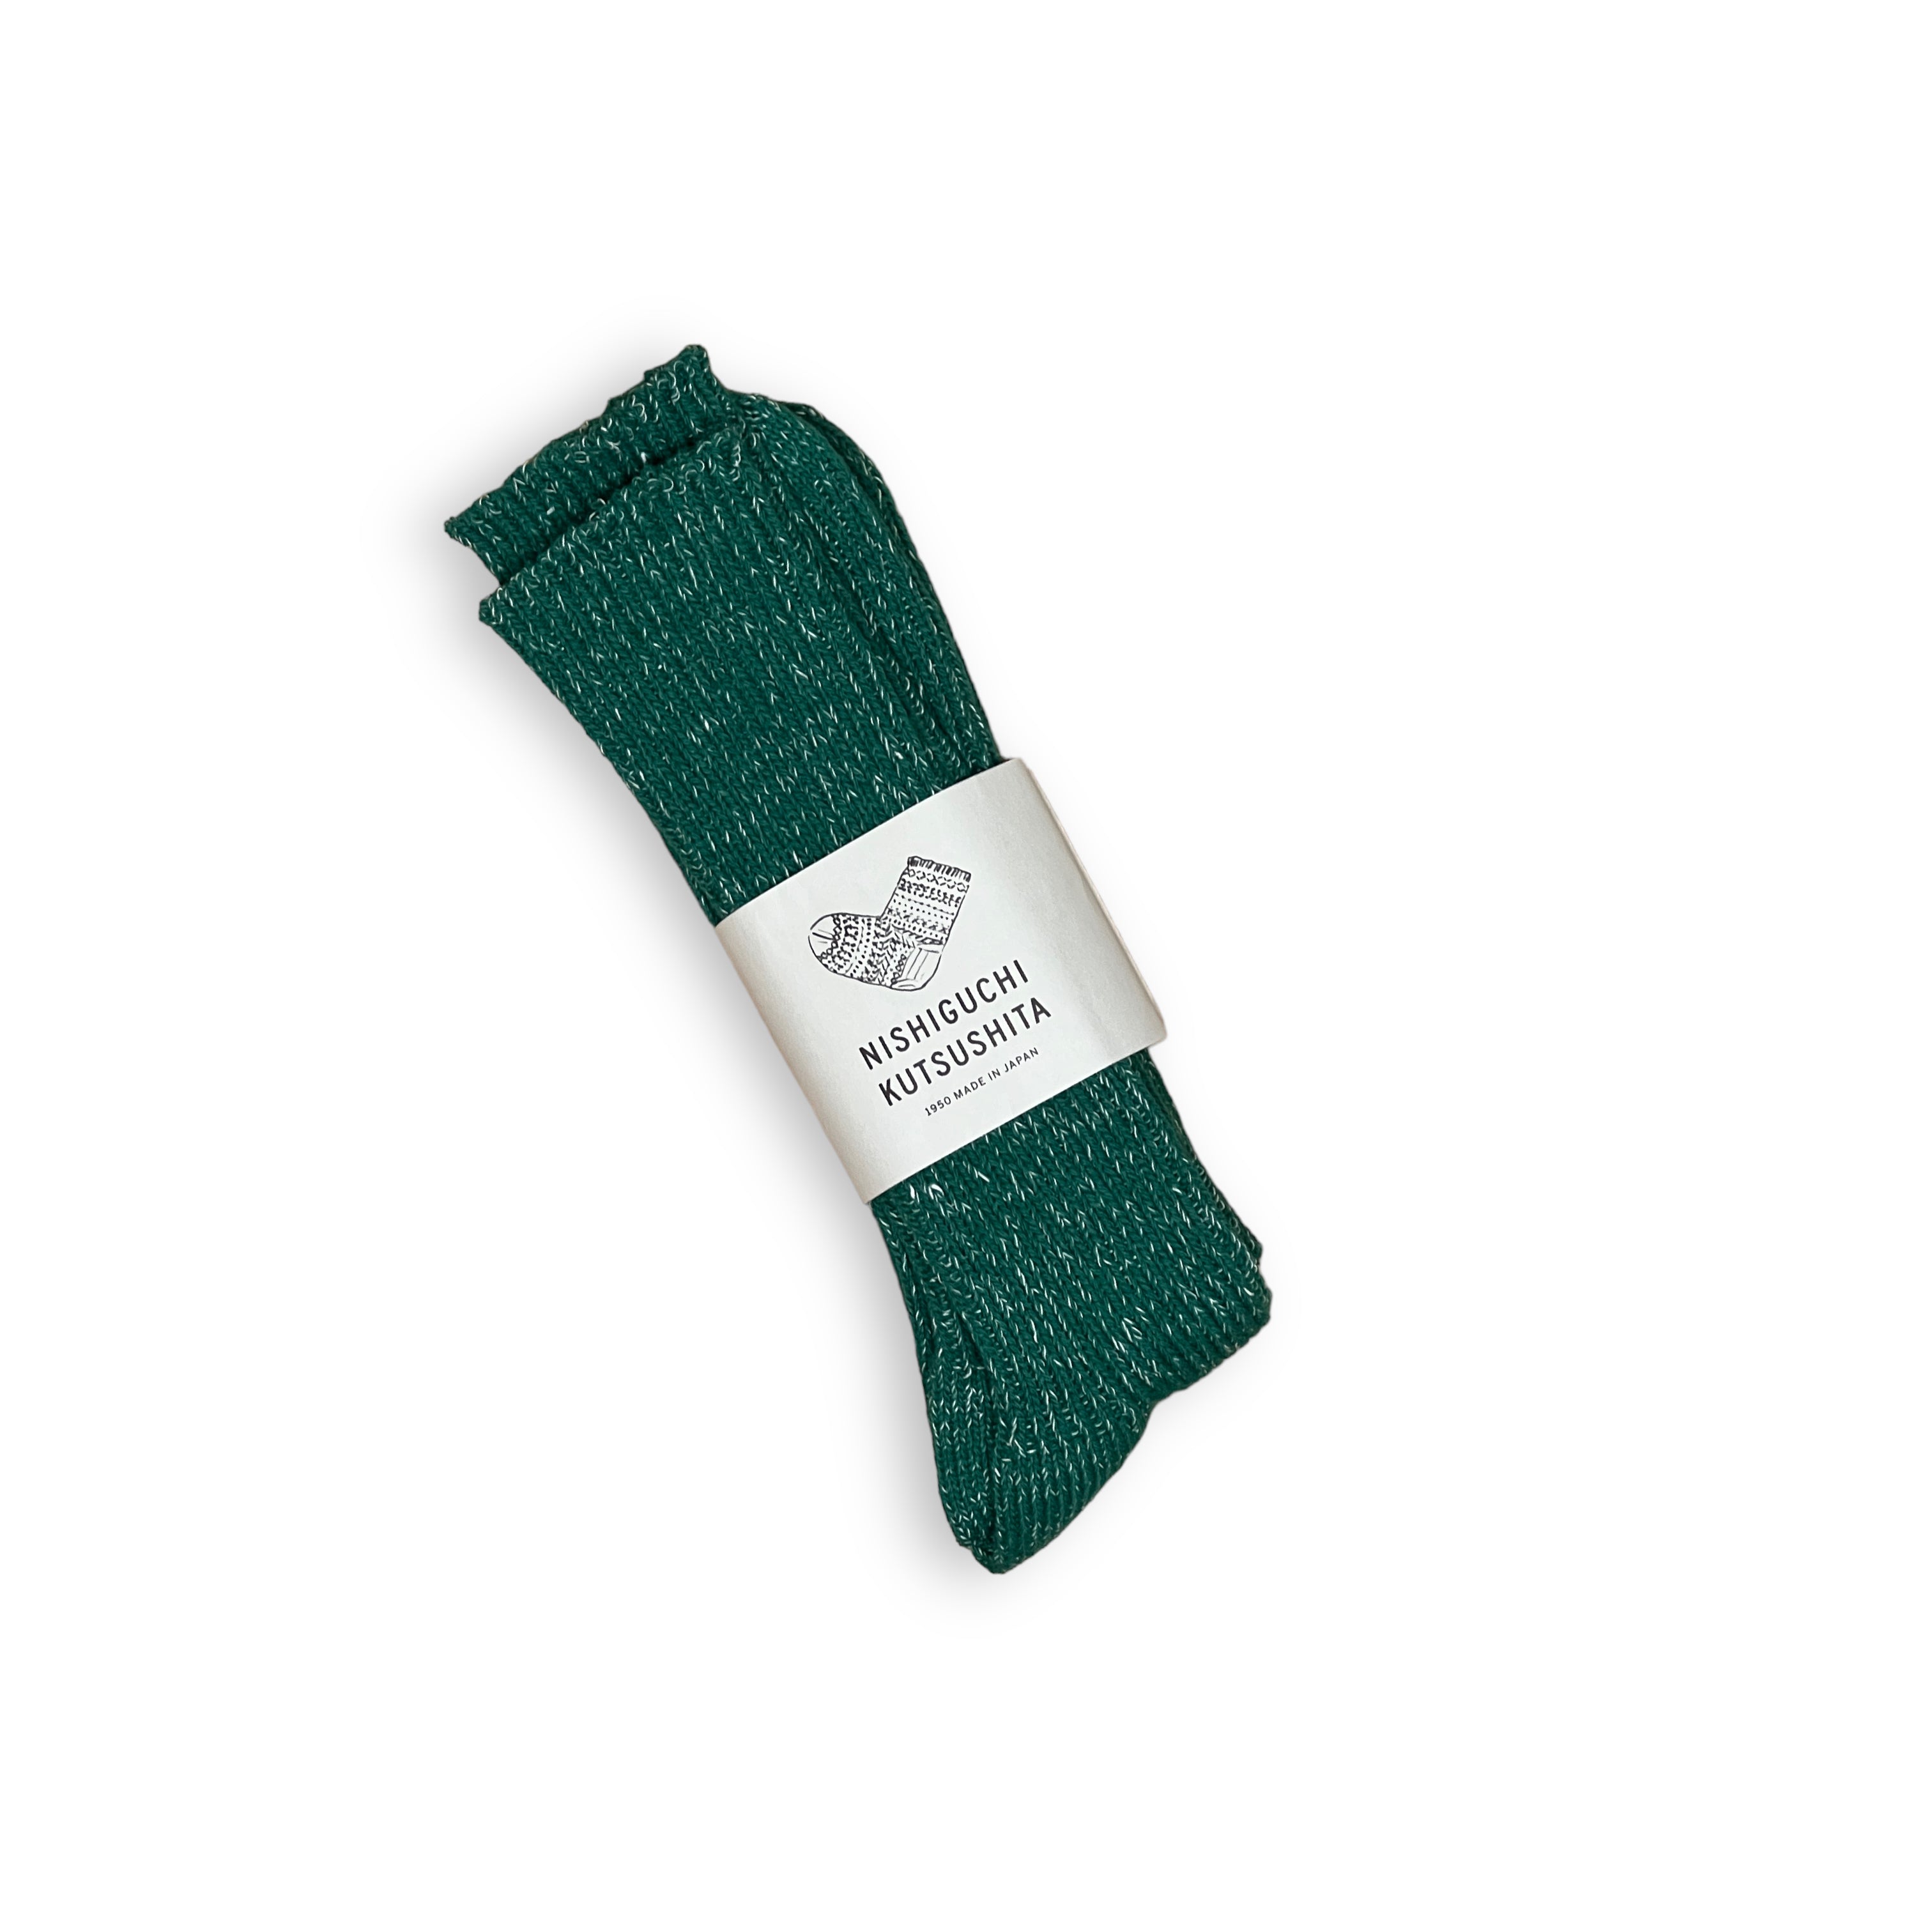 NISHIGUCHI KUTSUSHITA Hemp Cotton Ribbed Socks park green